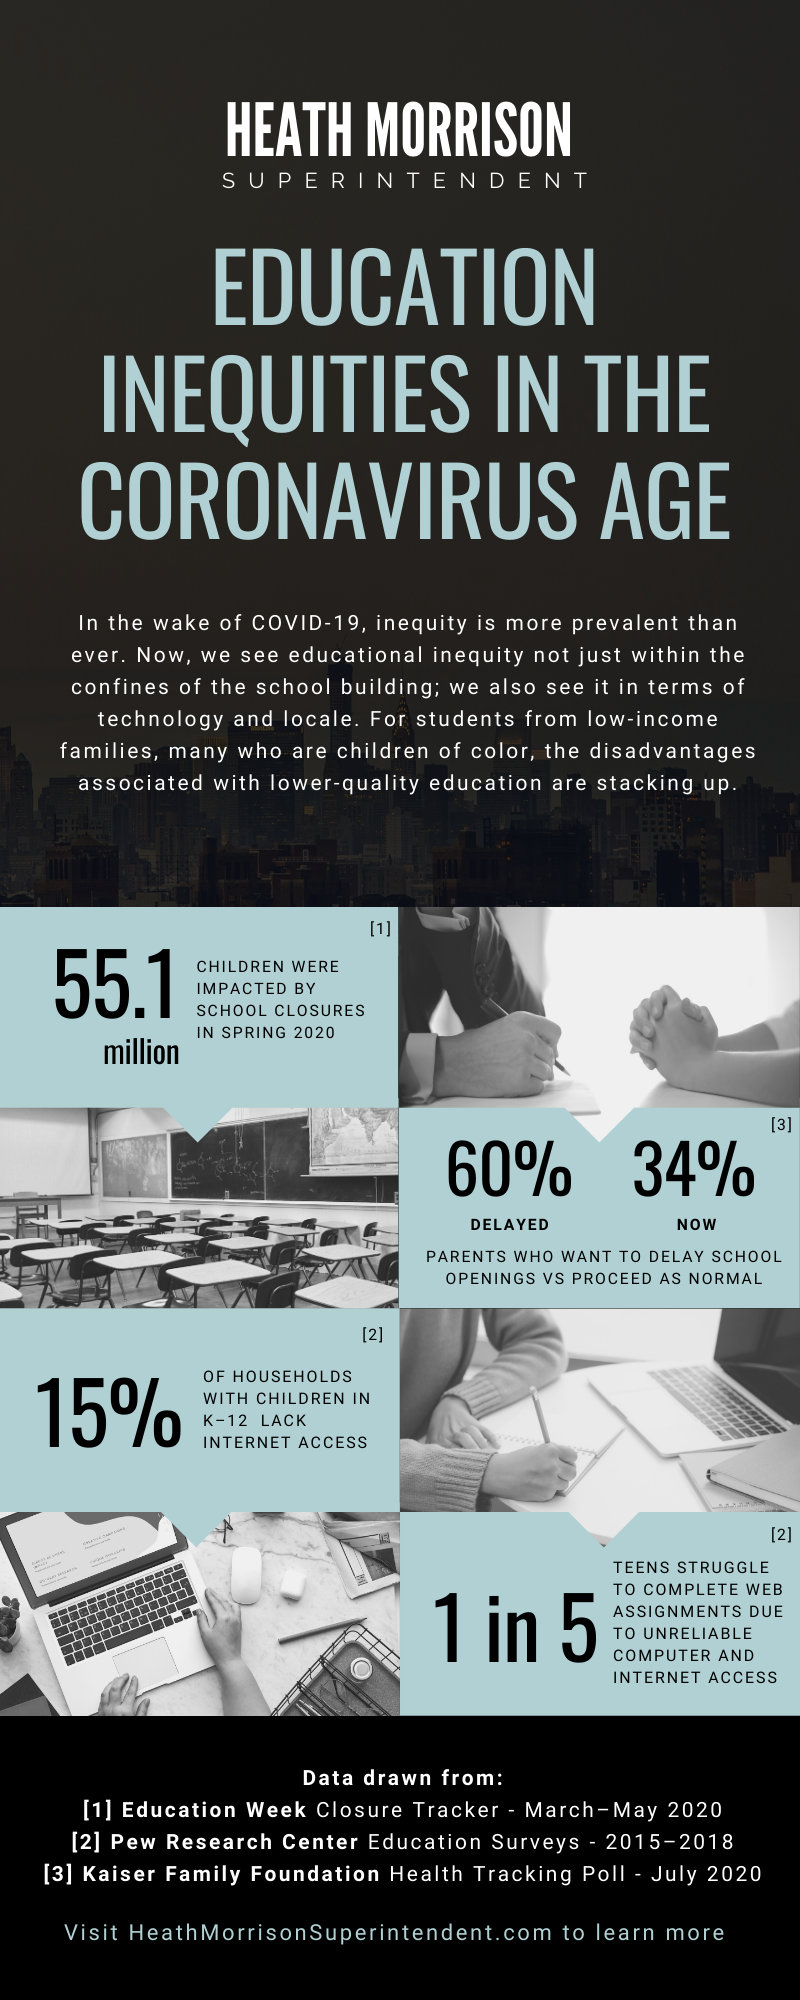 Heath Morrison Superintendent Charlotte Nc Education Inequities In The Coronavirus Age Infographic